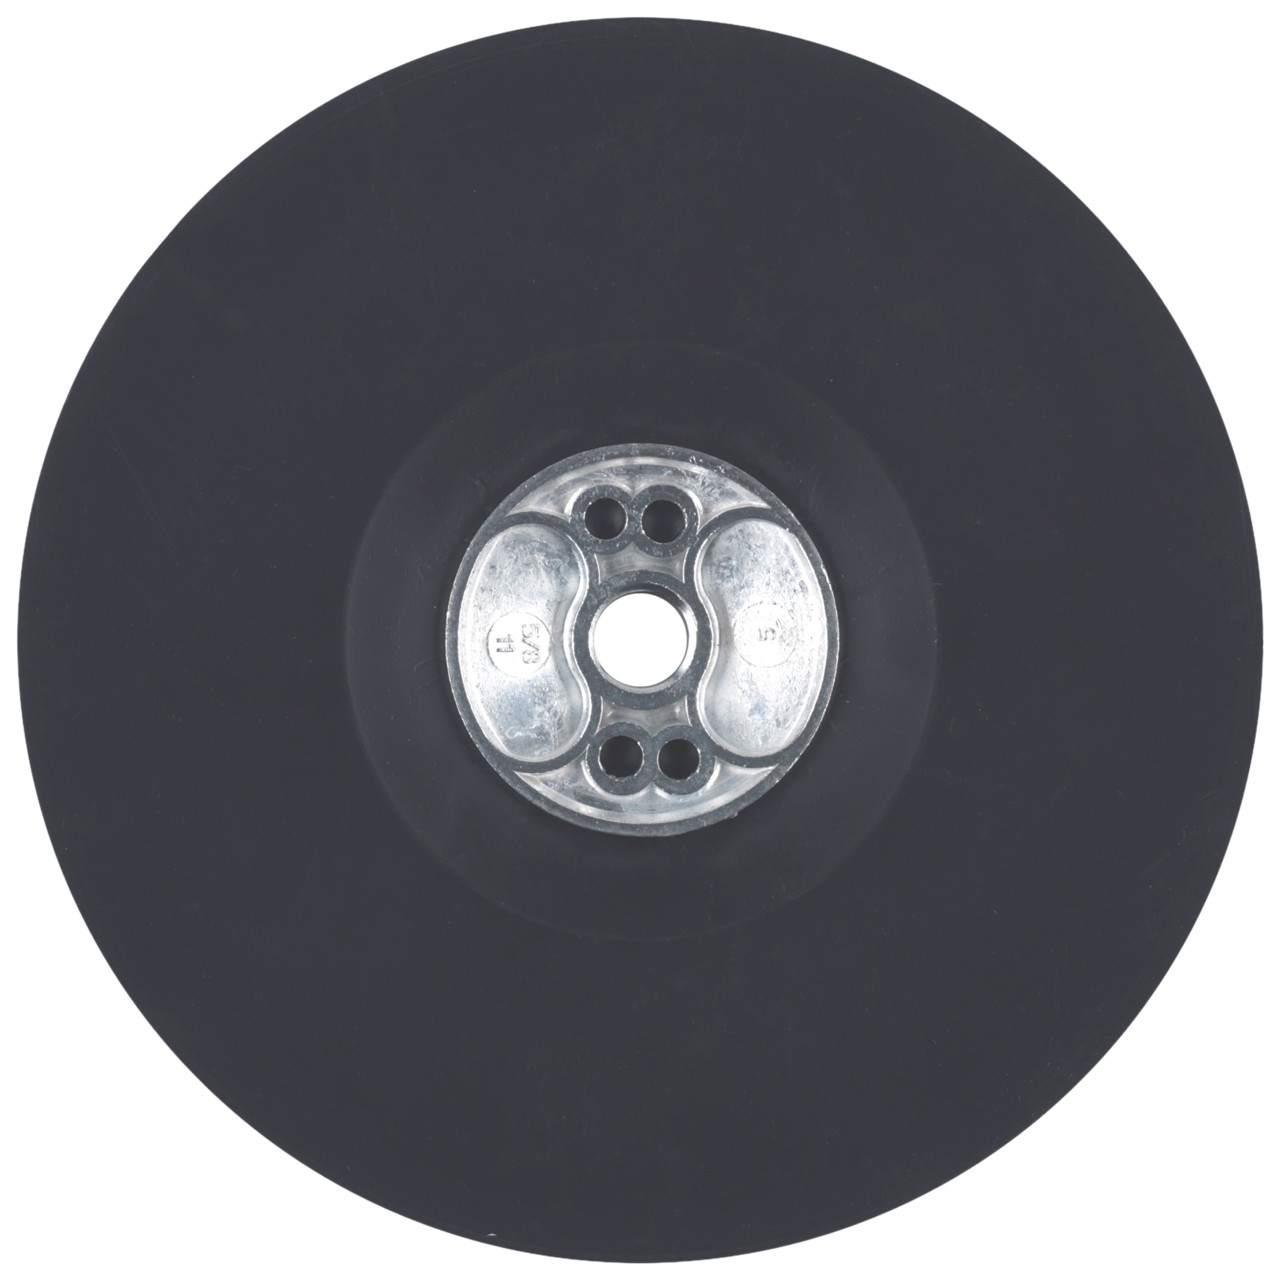 Accessori Tyrolit DxH 125x22 Per disco in fibra, durezza: HARD, forma: PAD, Art. 710002